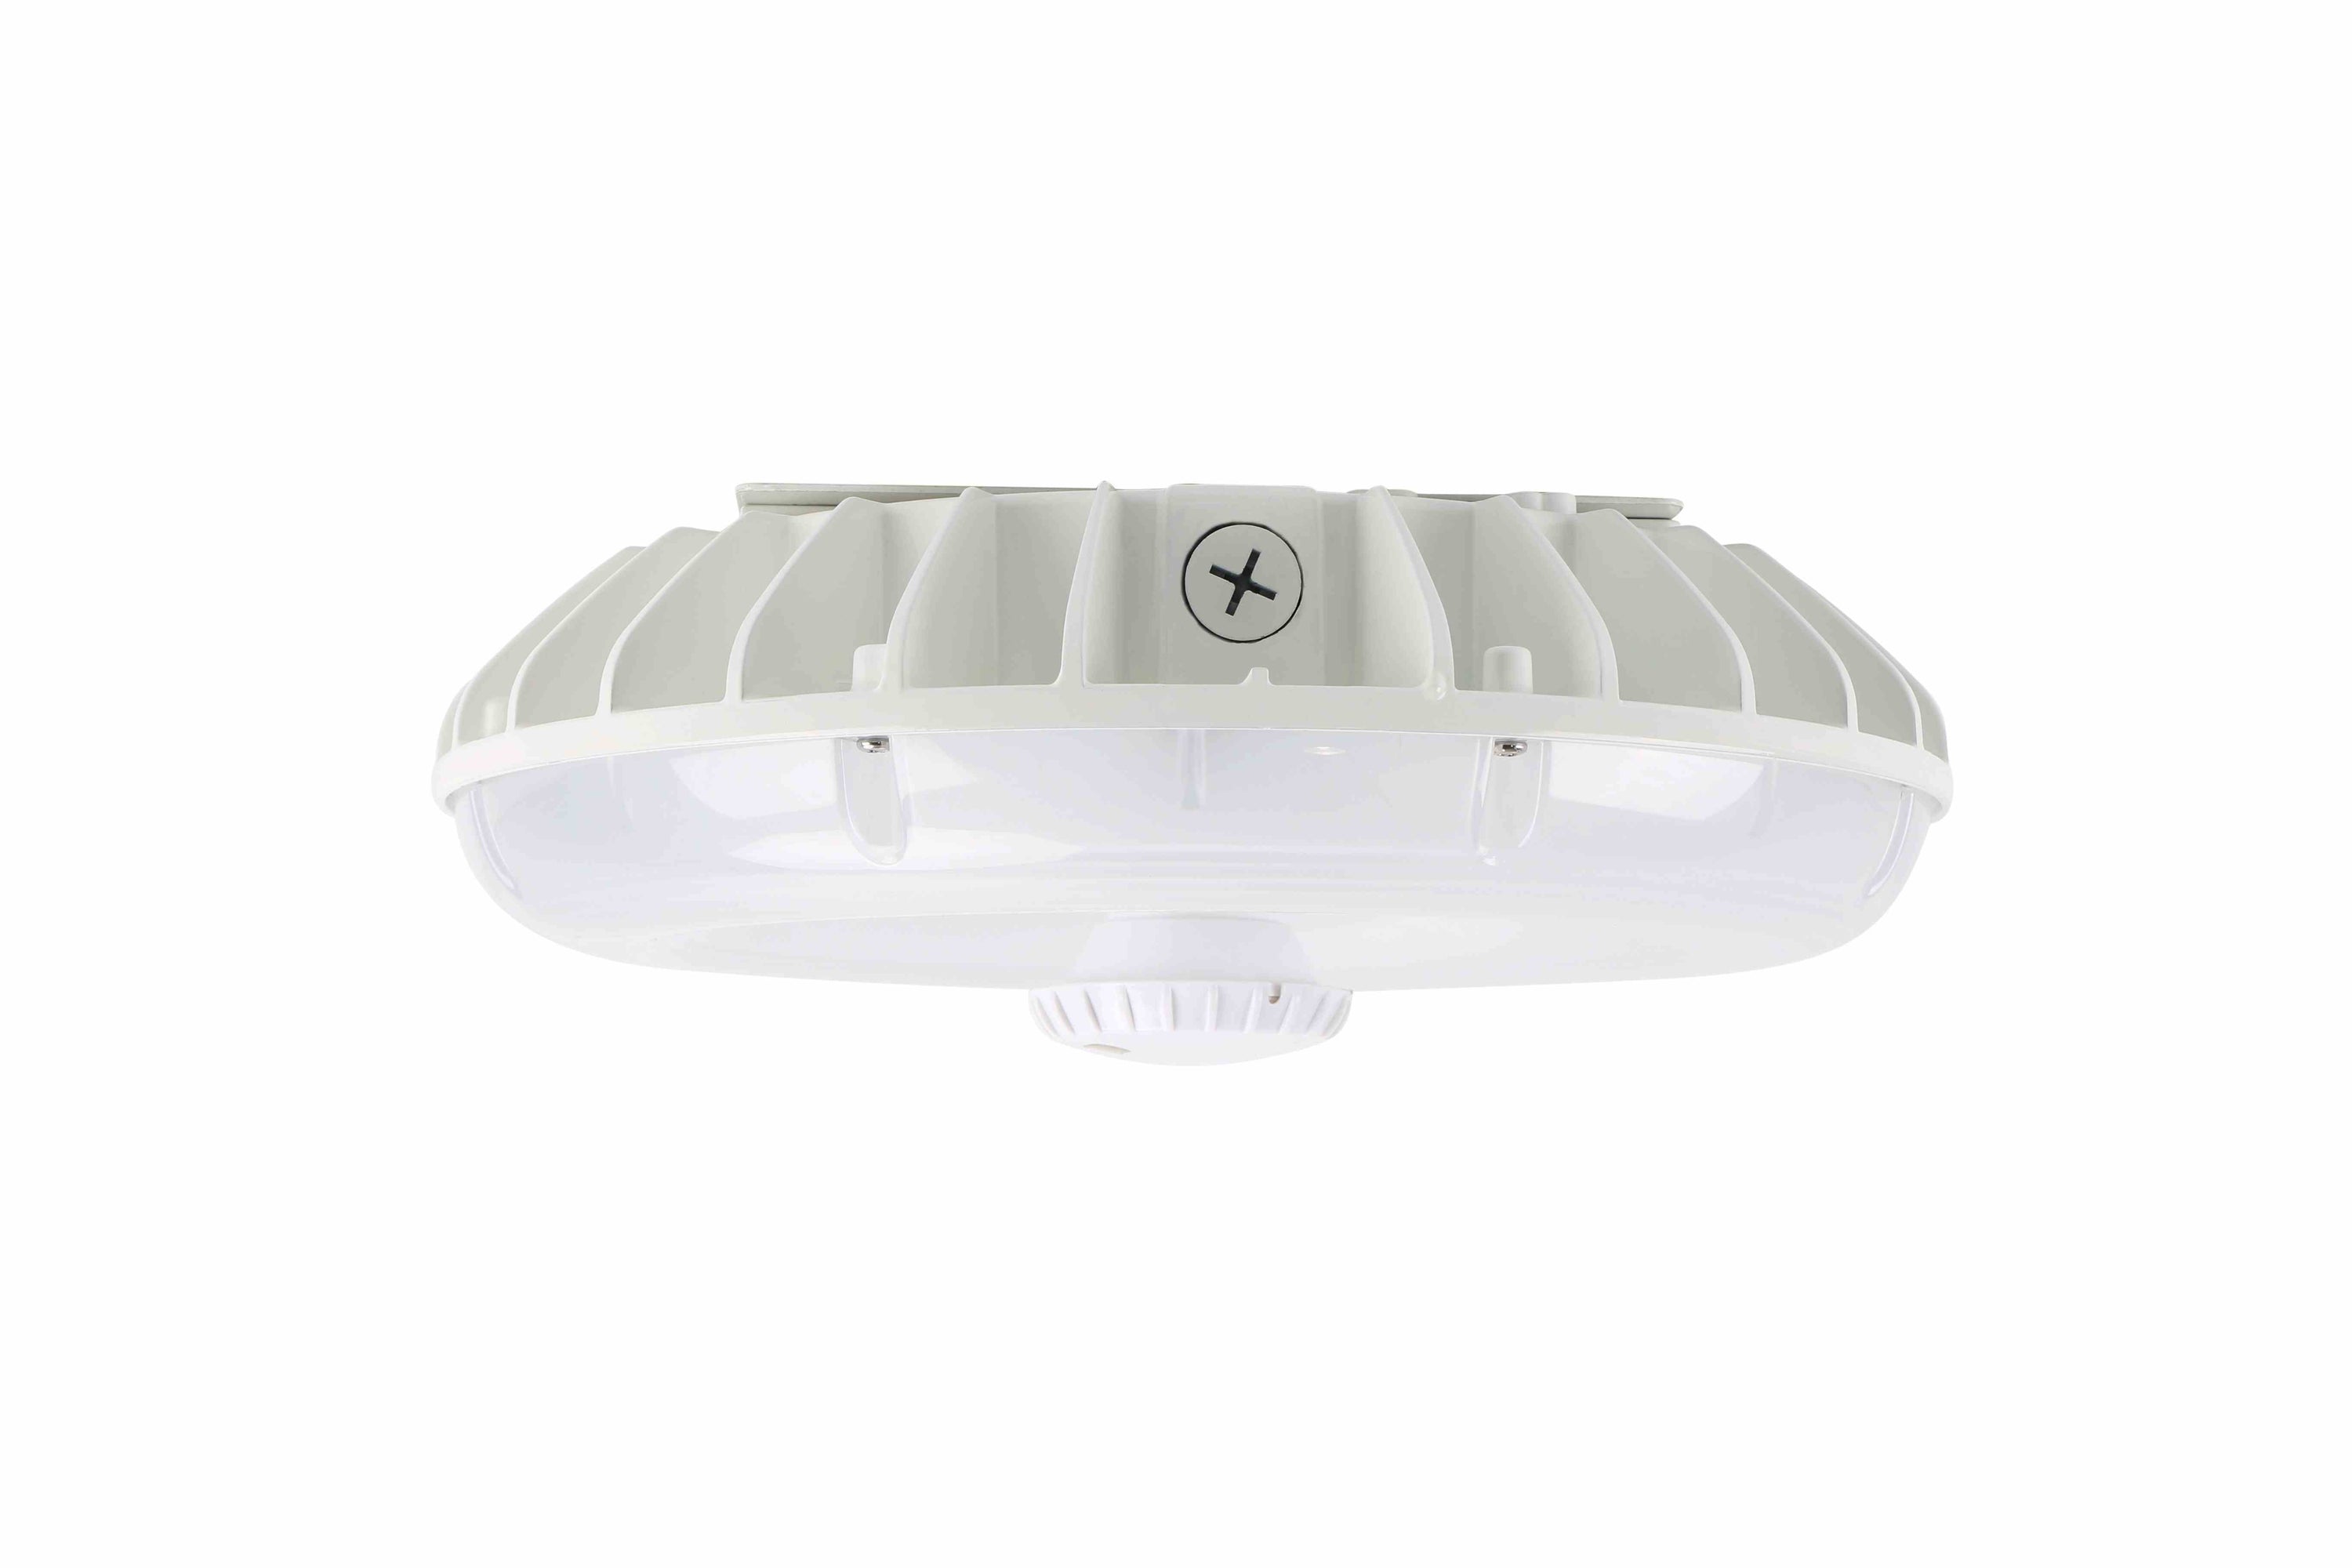 MCP03 Round LED Canopy Light 45W 5700LM 120-277VAC Dimmable 5000K Parking Garage Lens Bi-level Motion Sensor - White